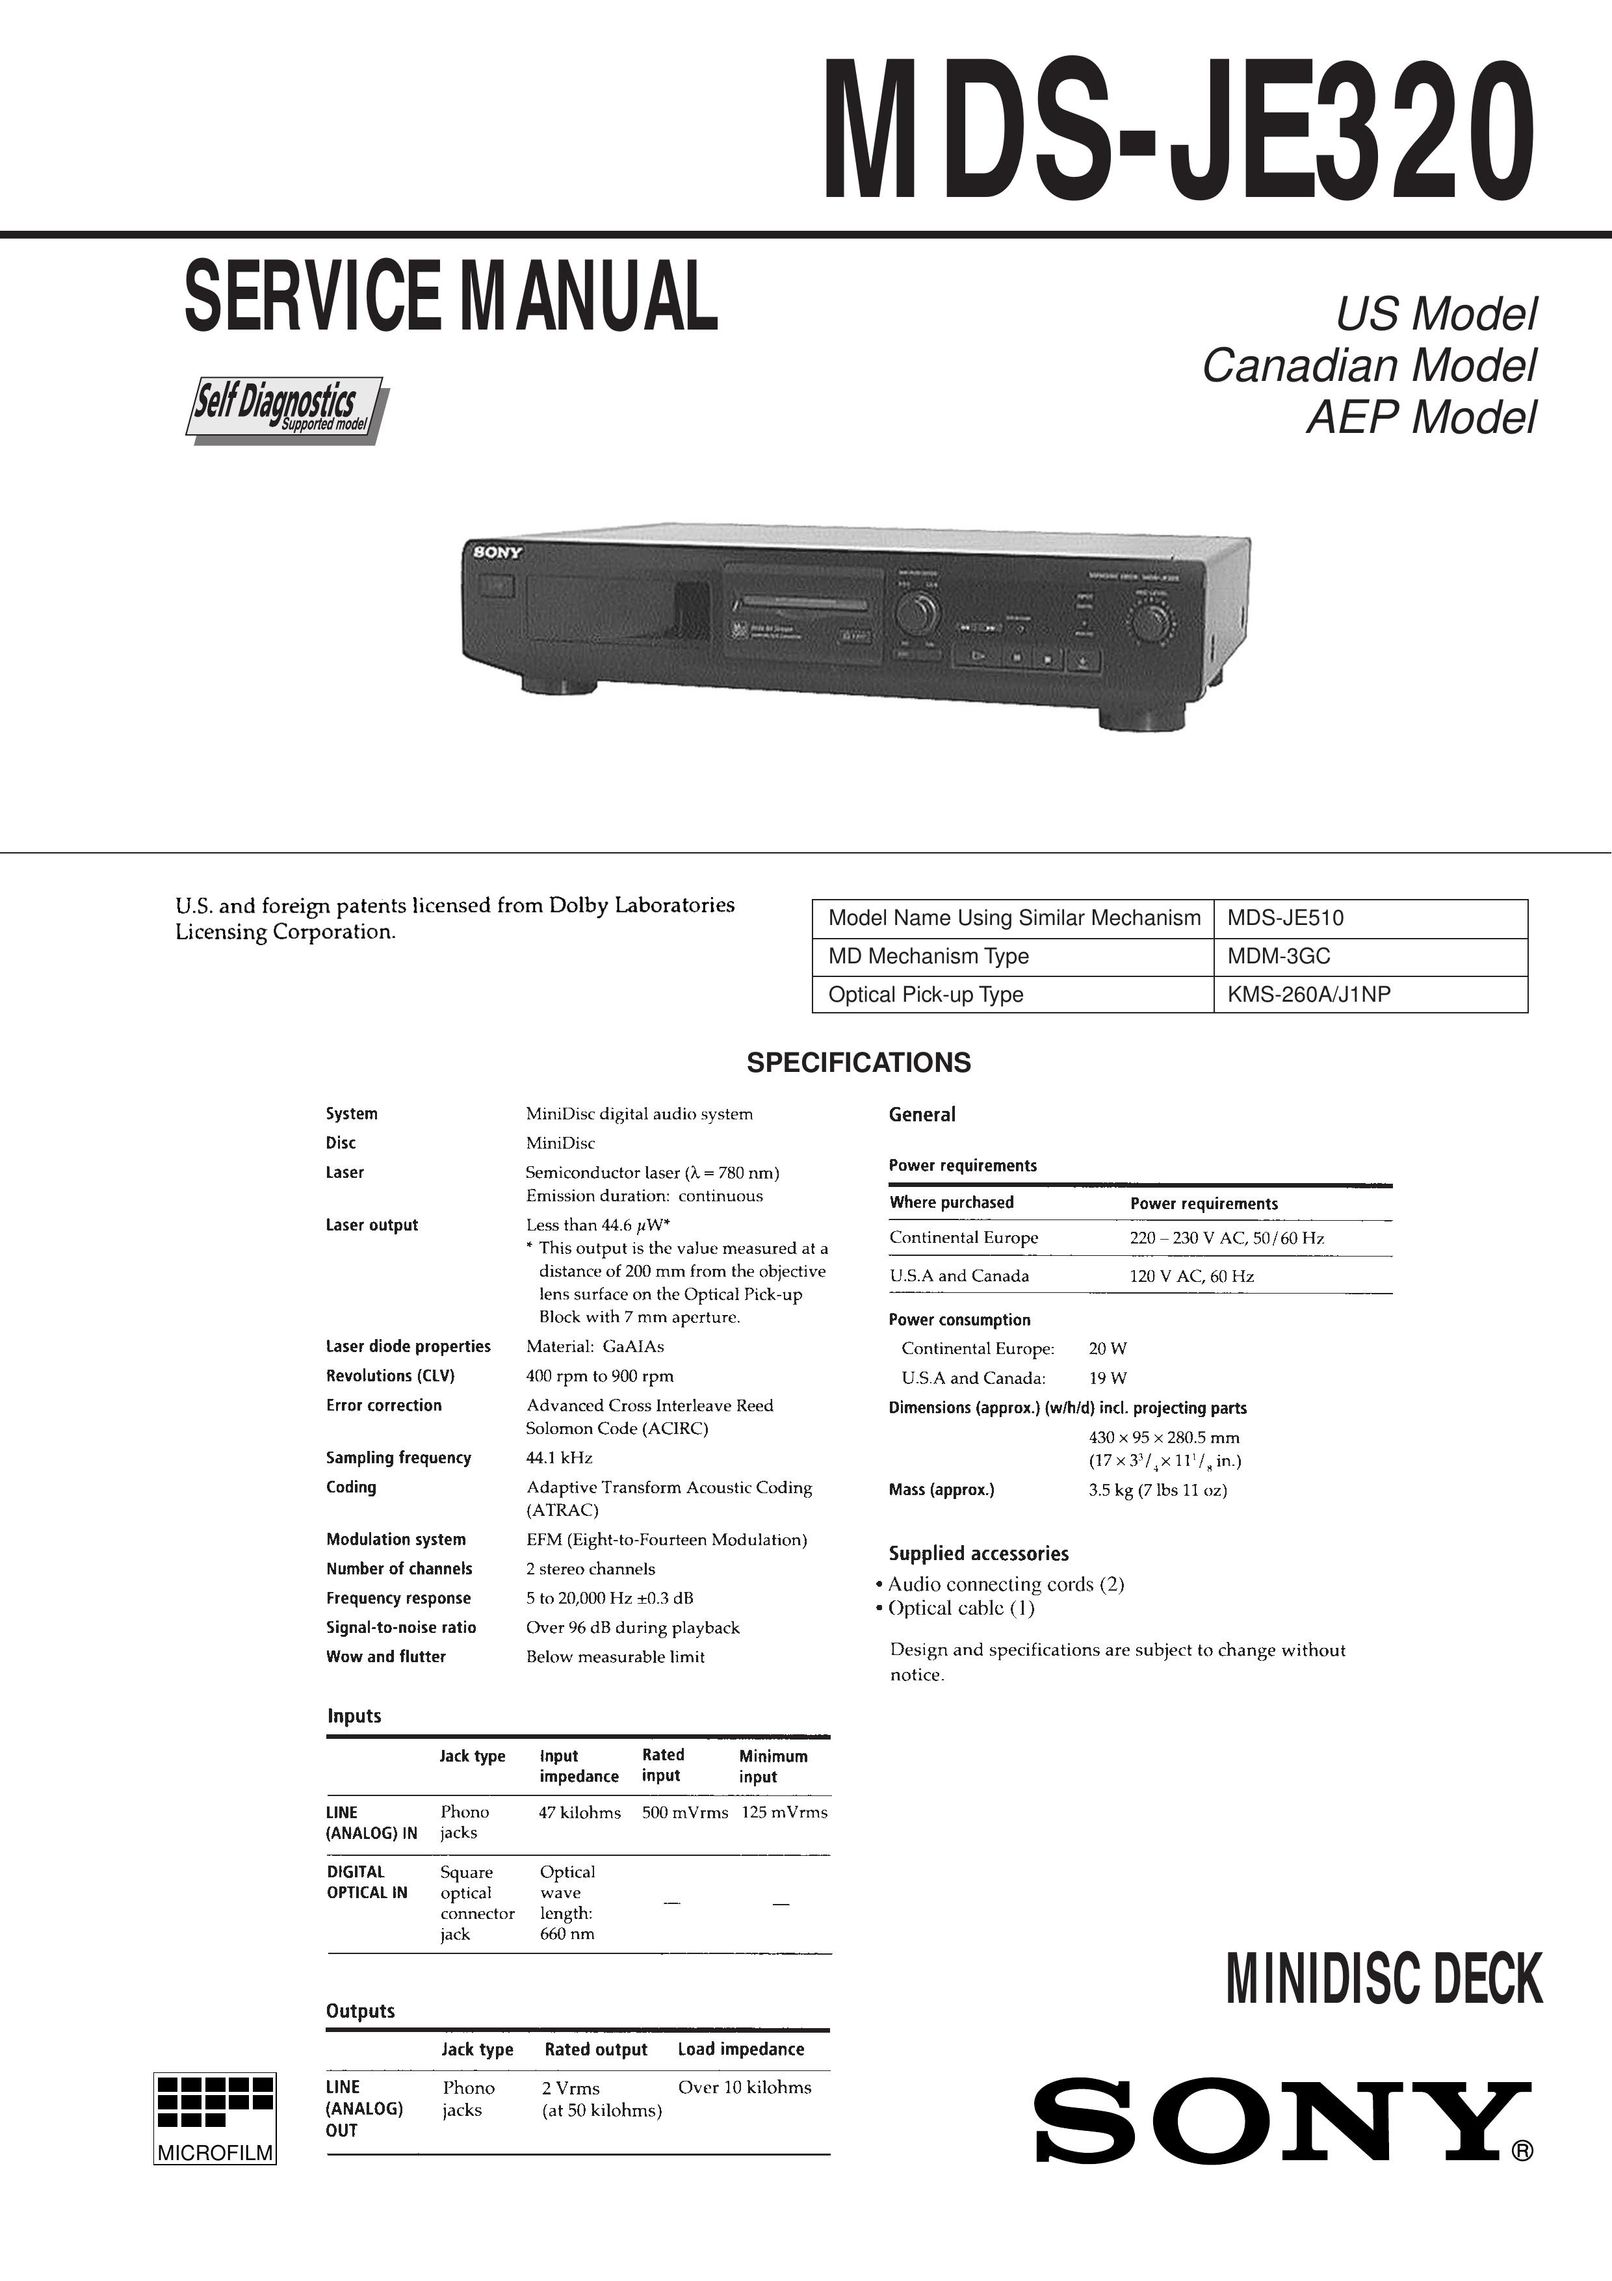 Sony MDS-JD320 MiniDisc Player User Manual